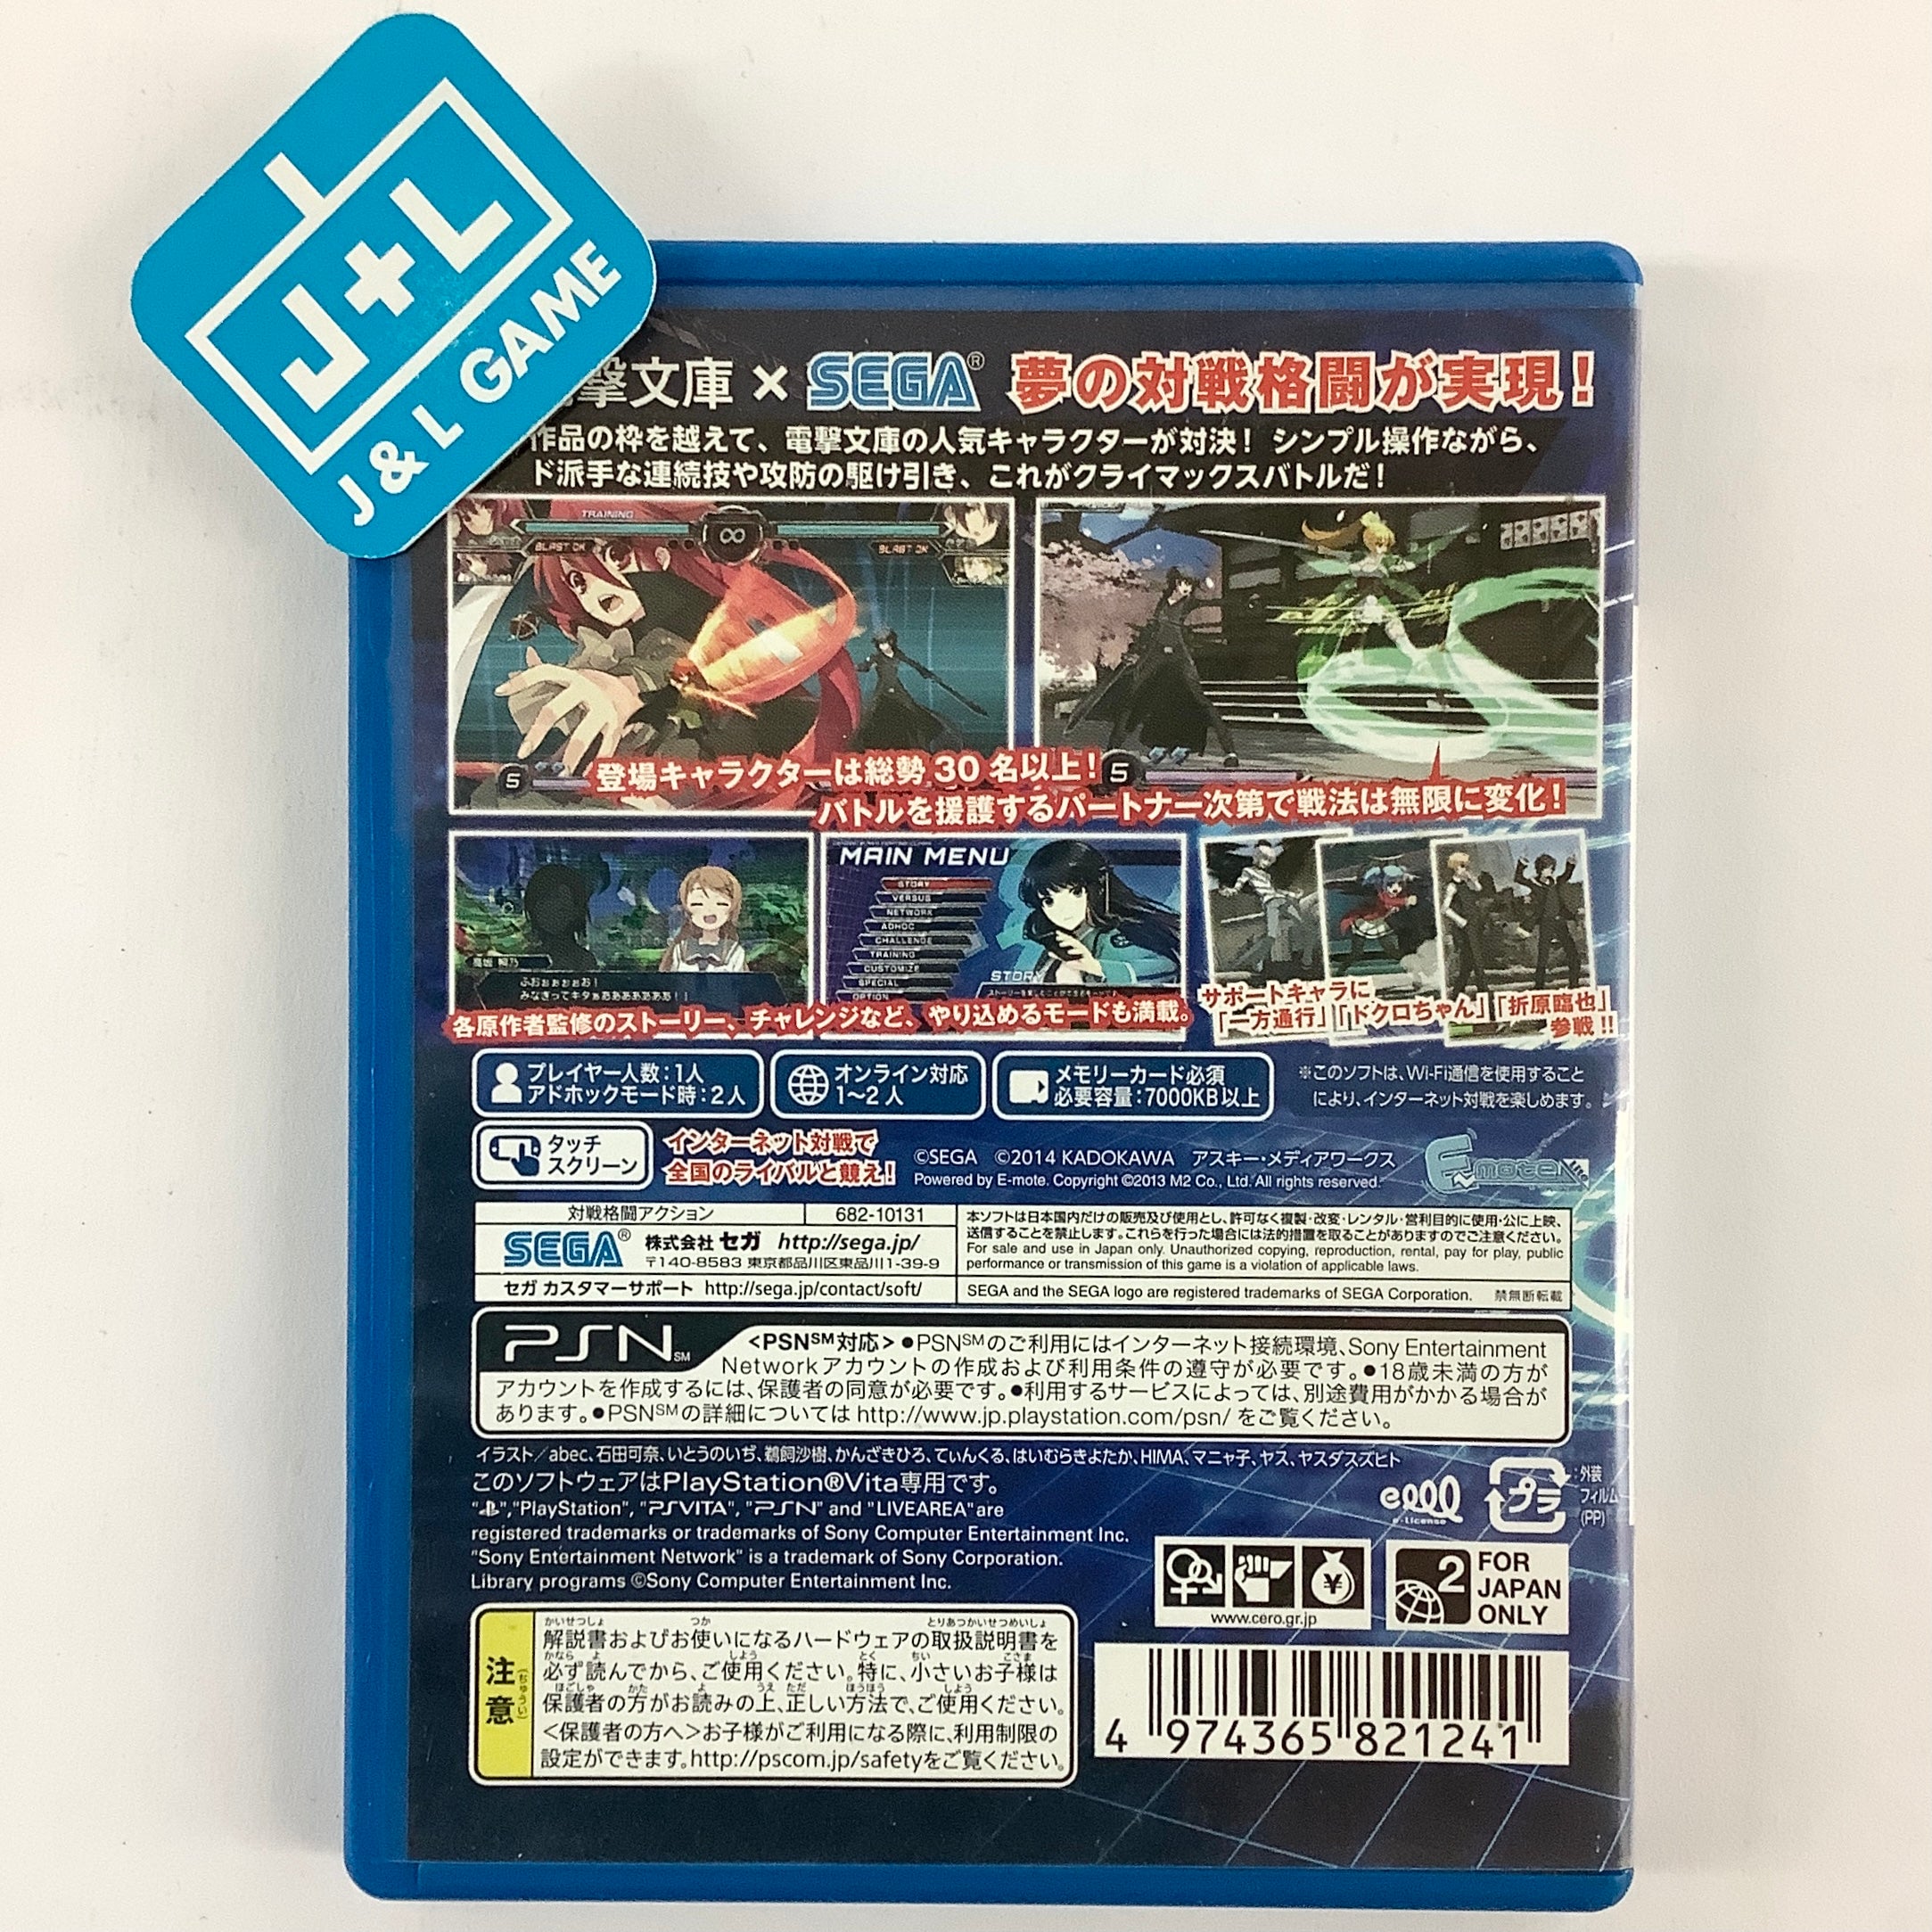 Dengeki Bunko: Fighting Climax - (PSV) PlayStation Vita [Pre-Owned] (Japanese Import) Video Games Sega   